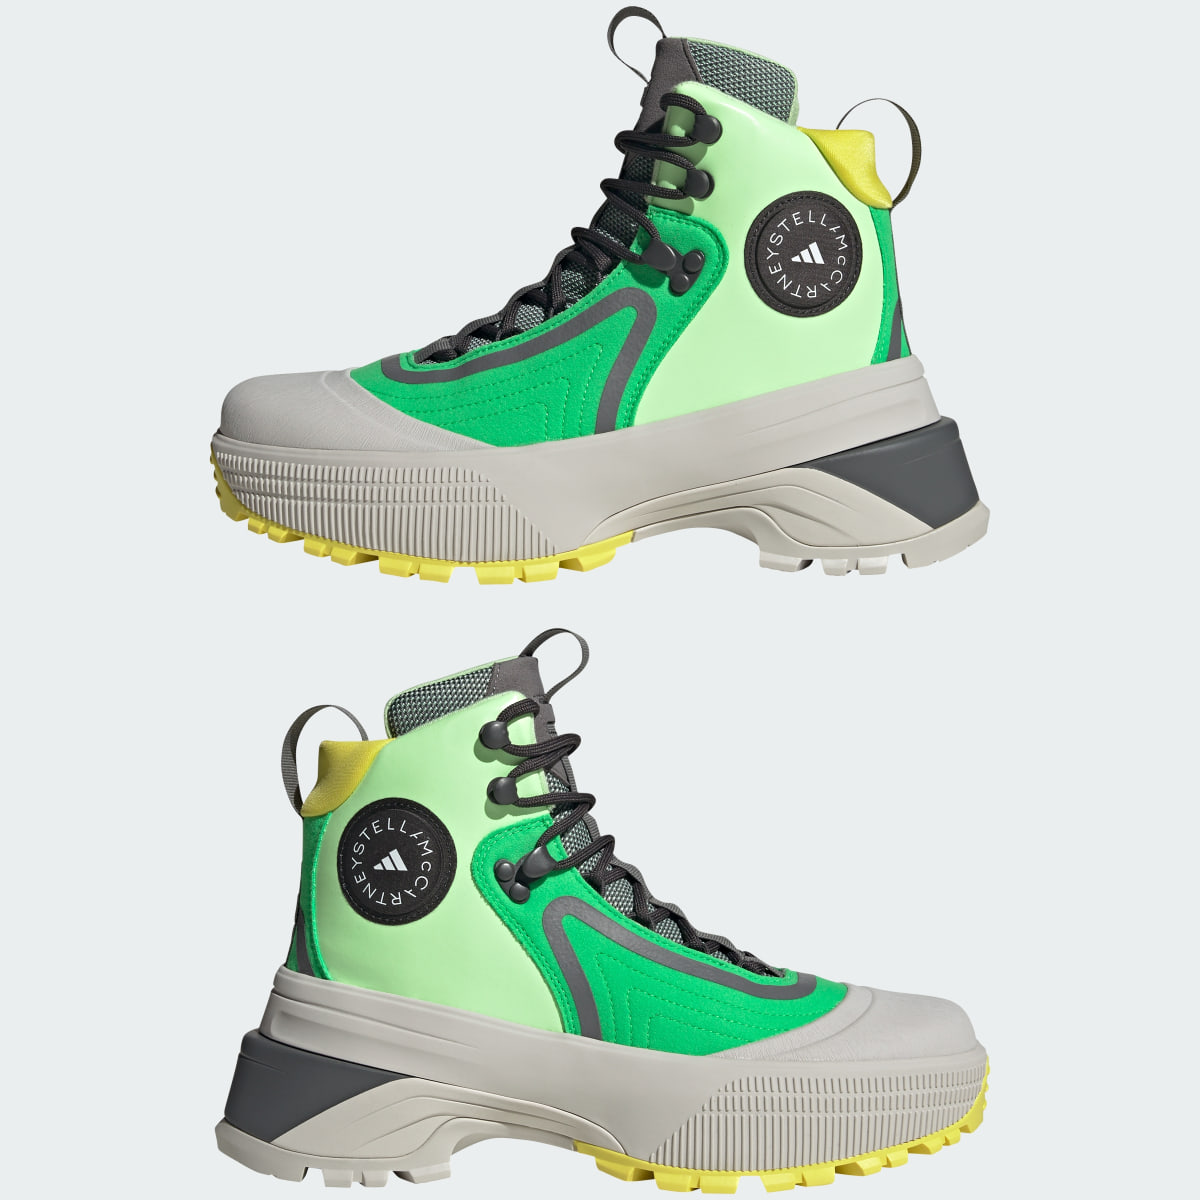 Adidas by Stella McCartney x Terrex Hiking Boots. 8